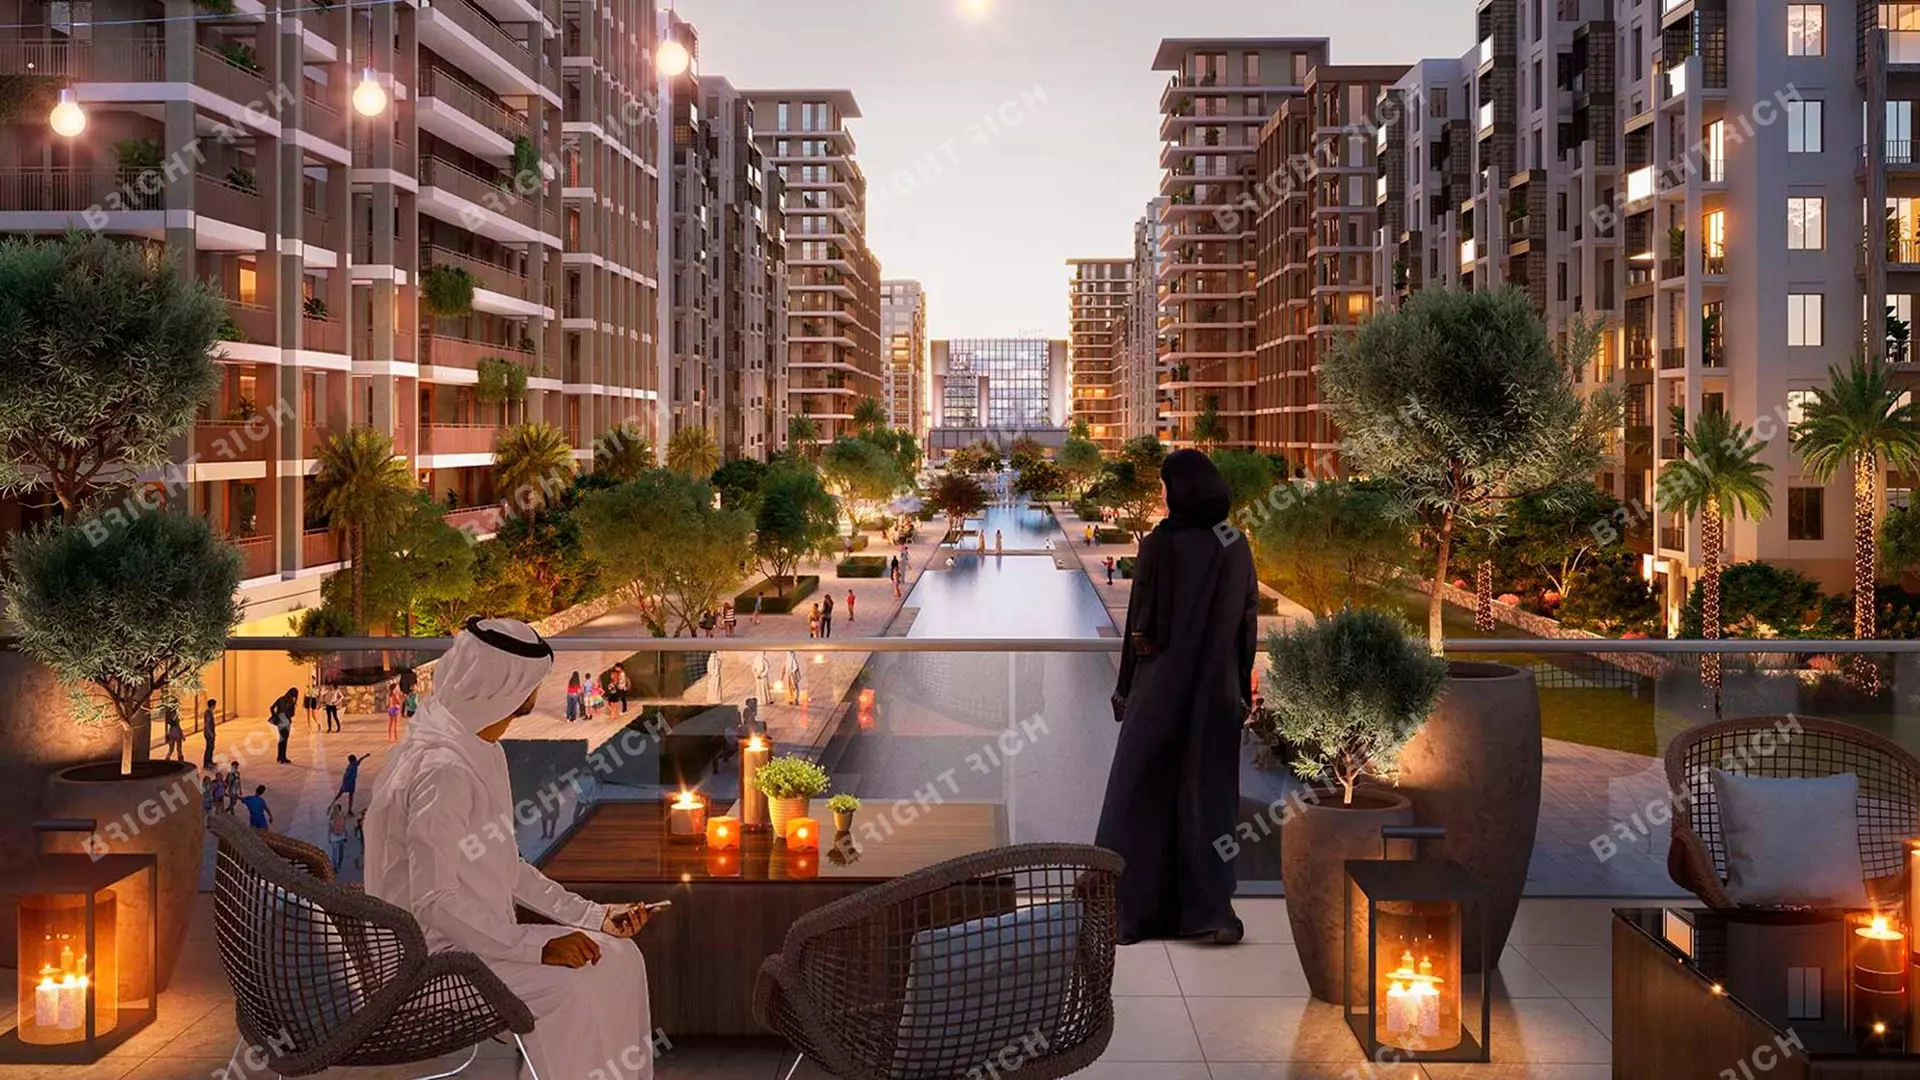 Rimal Residences, apart complex in Sharjah - 3